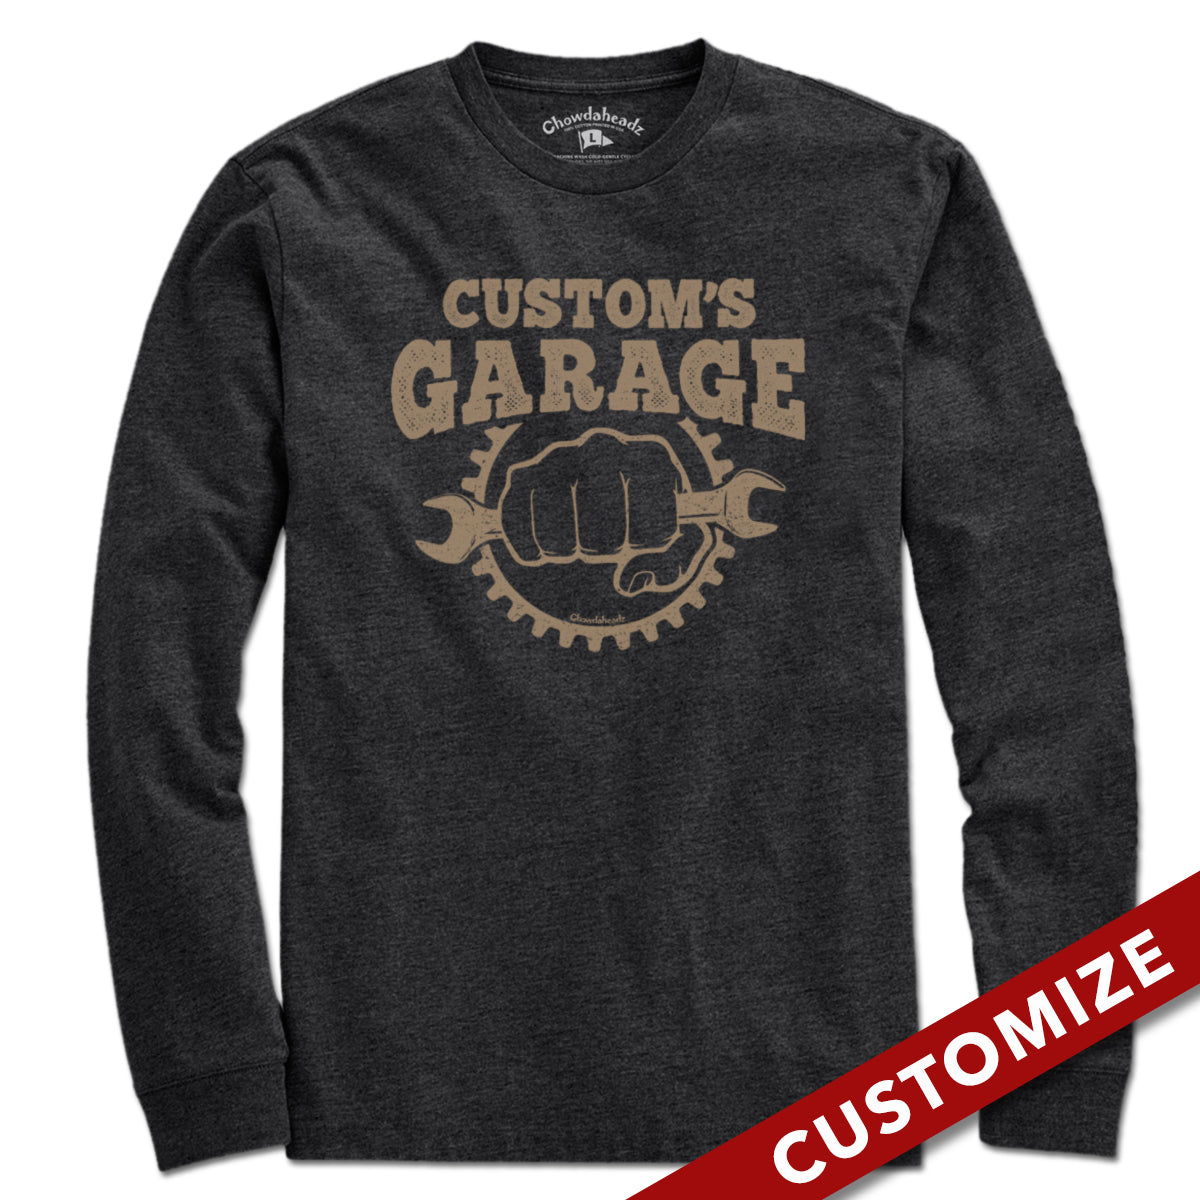 Custom Name's Garage T-Shirt - Chowdaheadz